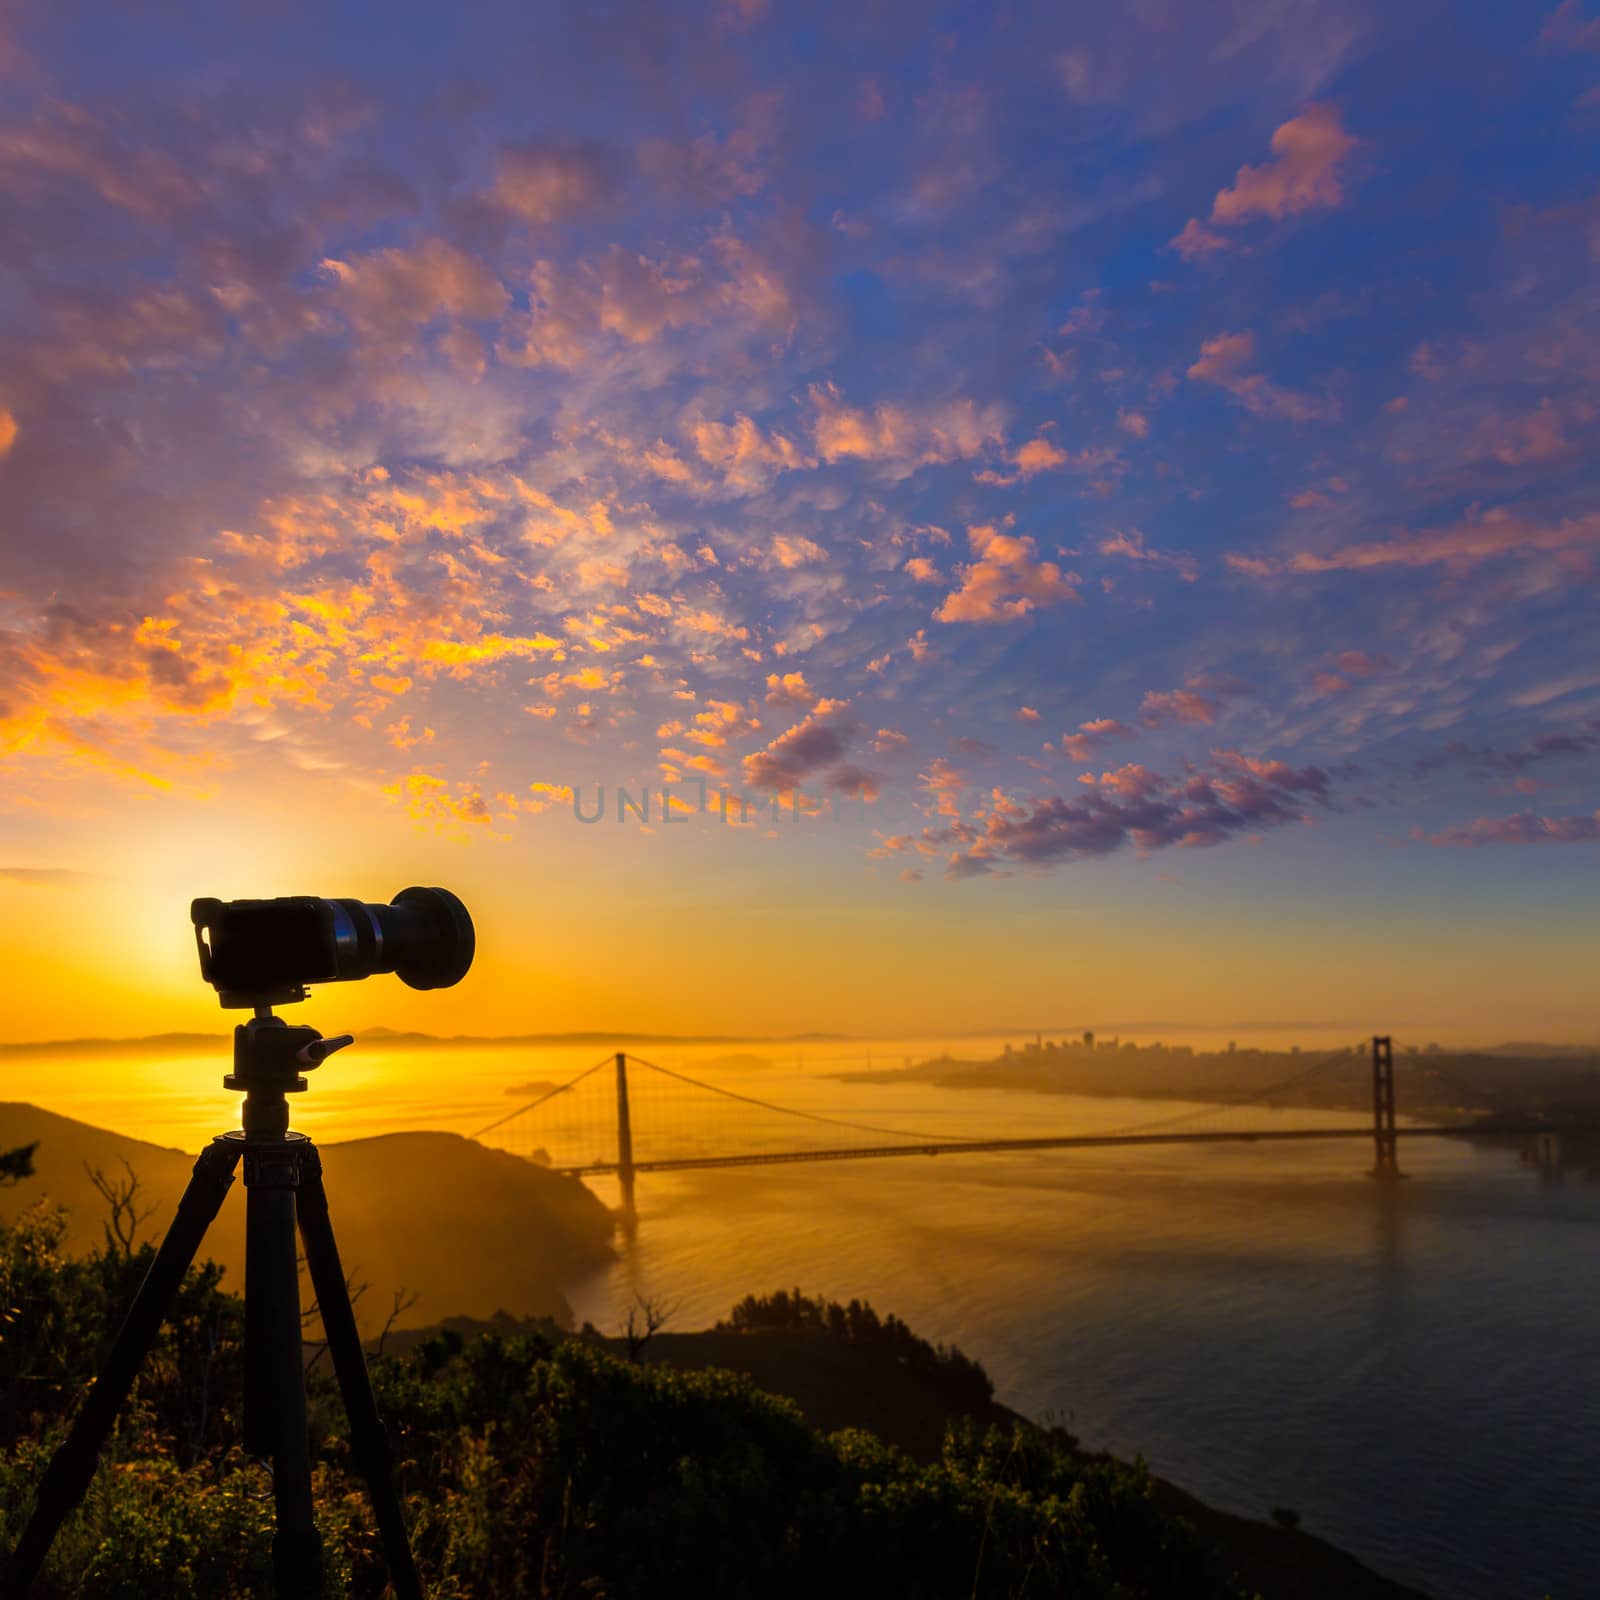 Golden Gate Bridge San Francisco sunrise California by lunamarina